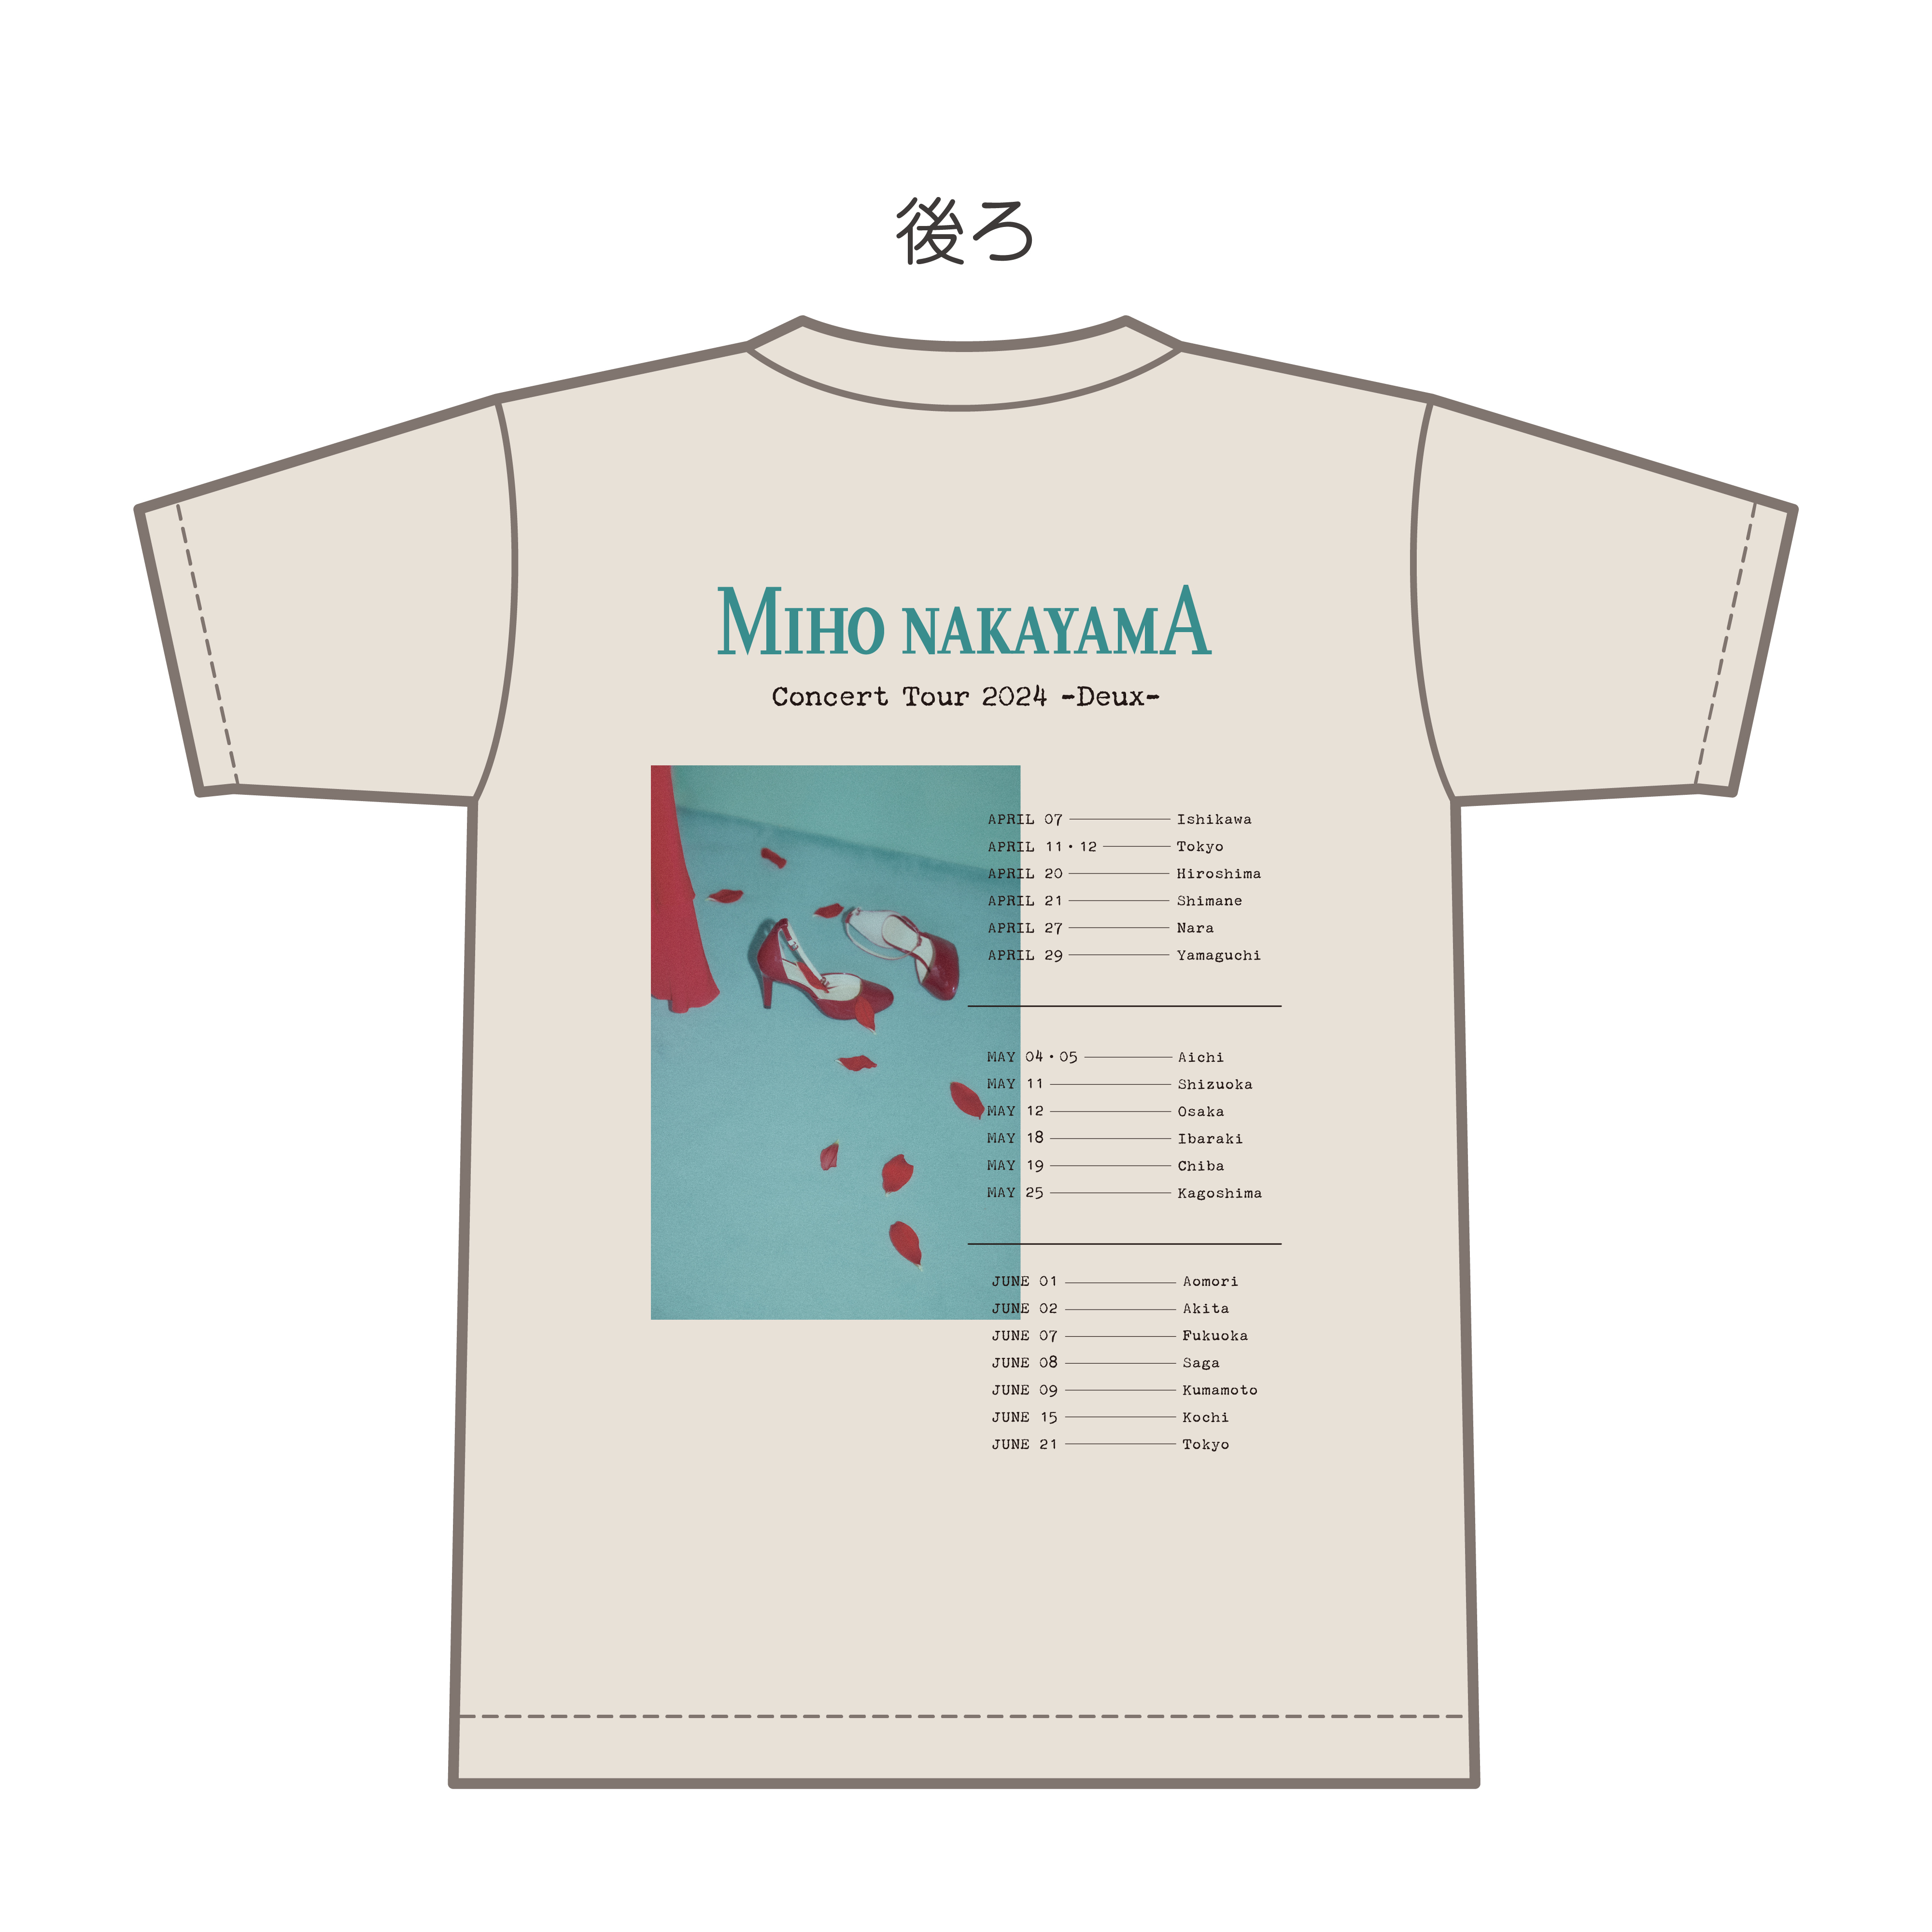 Miho Nakayama Concert Tour 2024 -Deux- Tシャツ(バニラホワイト)